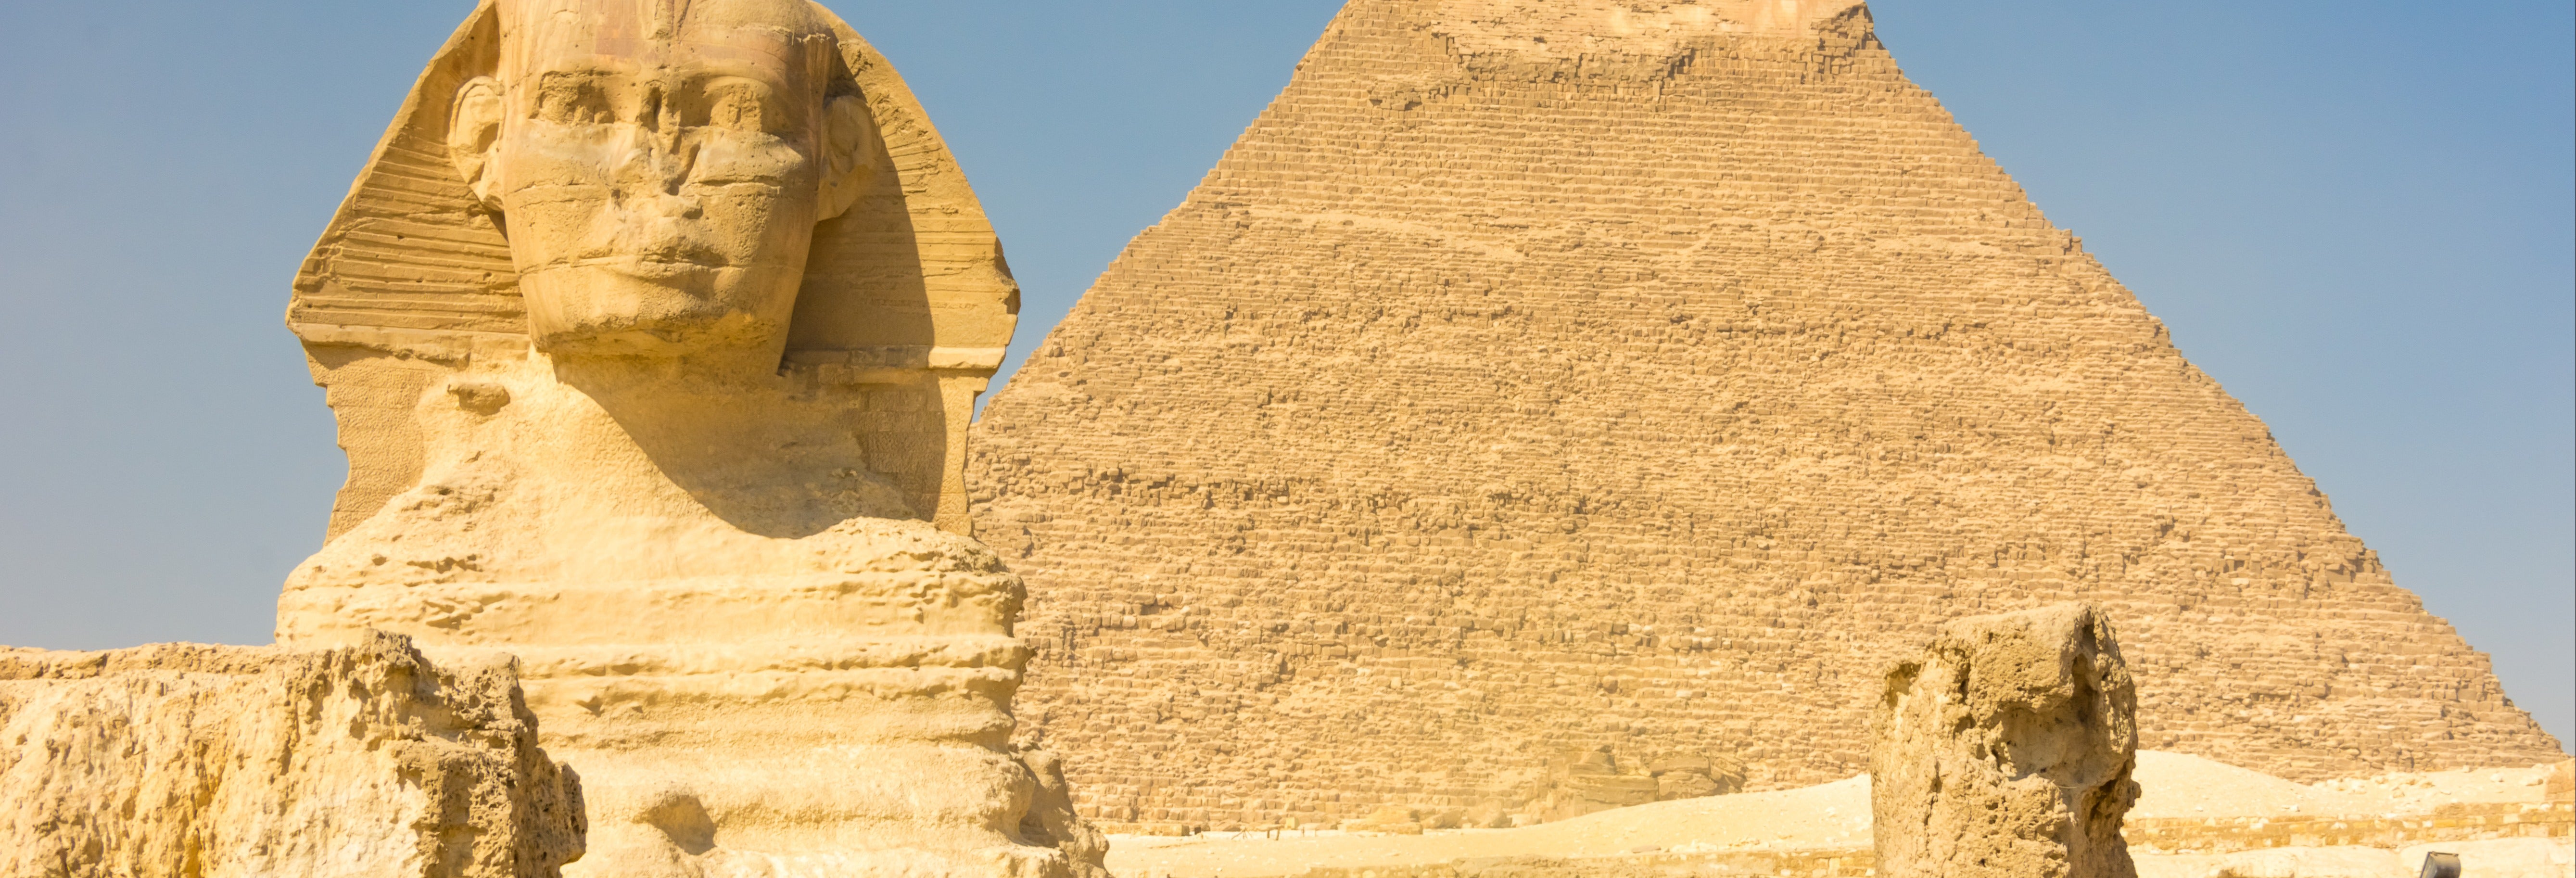 Piramidi di Giza, Menfi e Saqqara